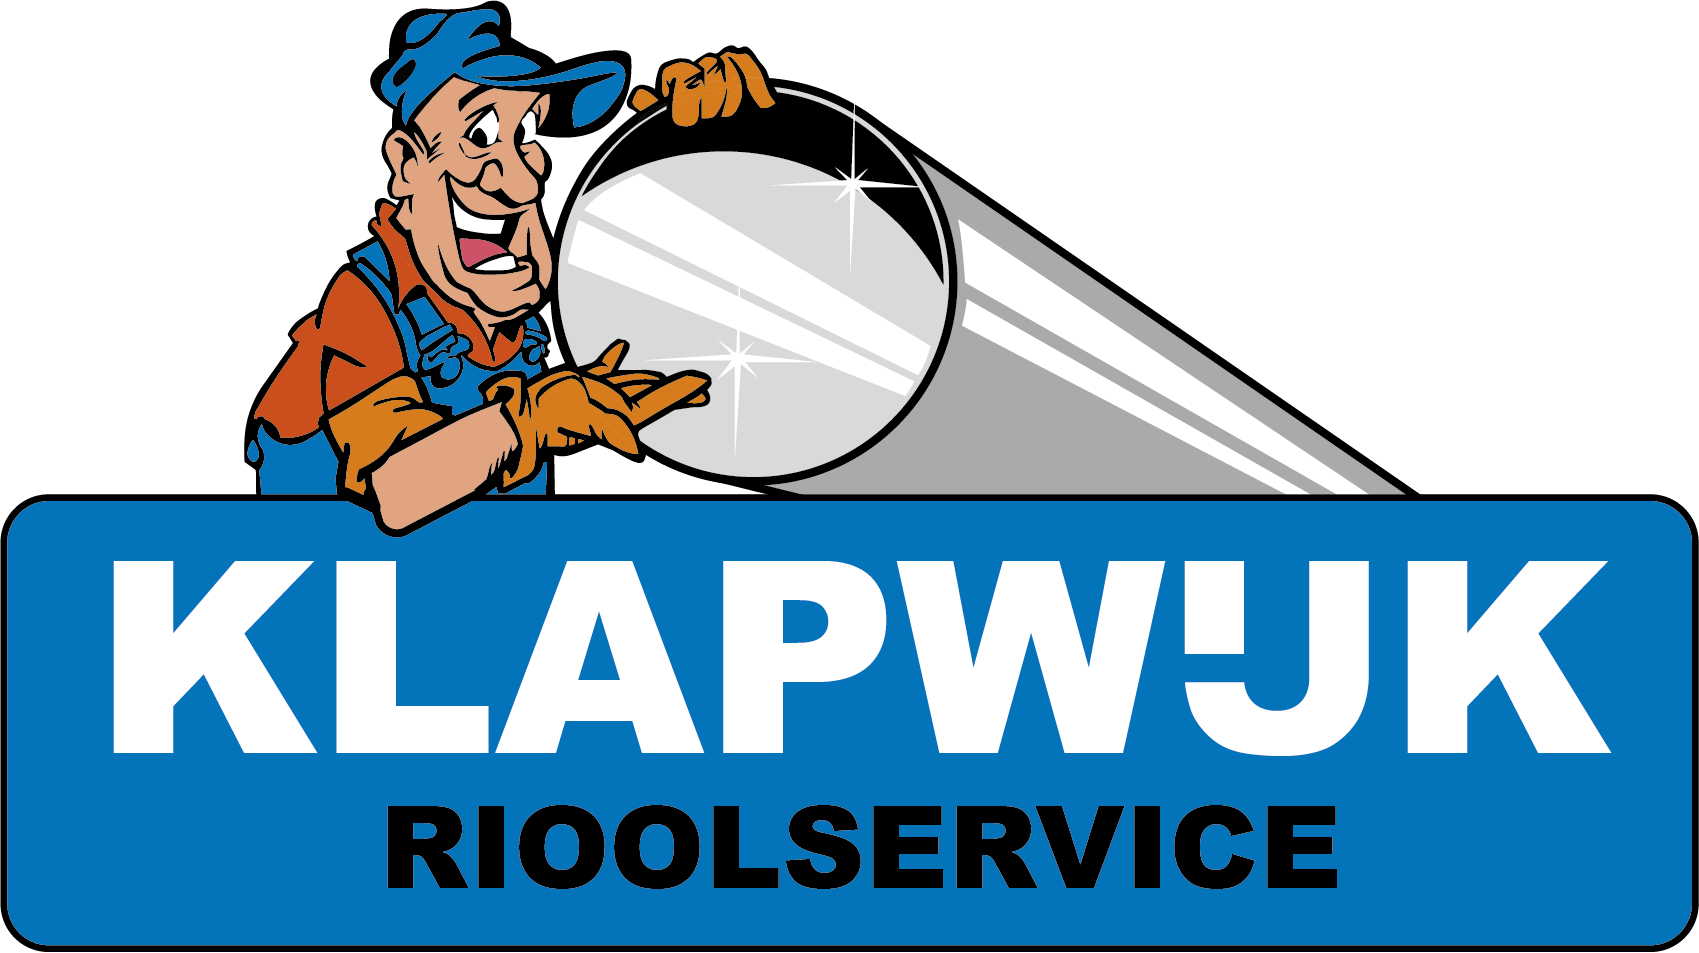 Klapwijk Rioolservice logo